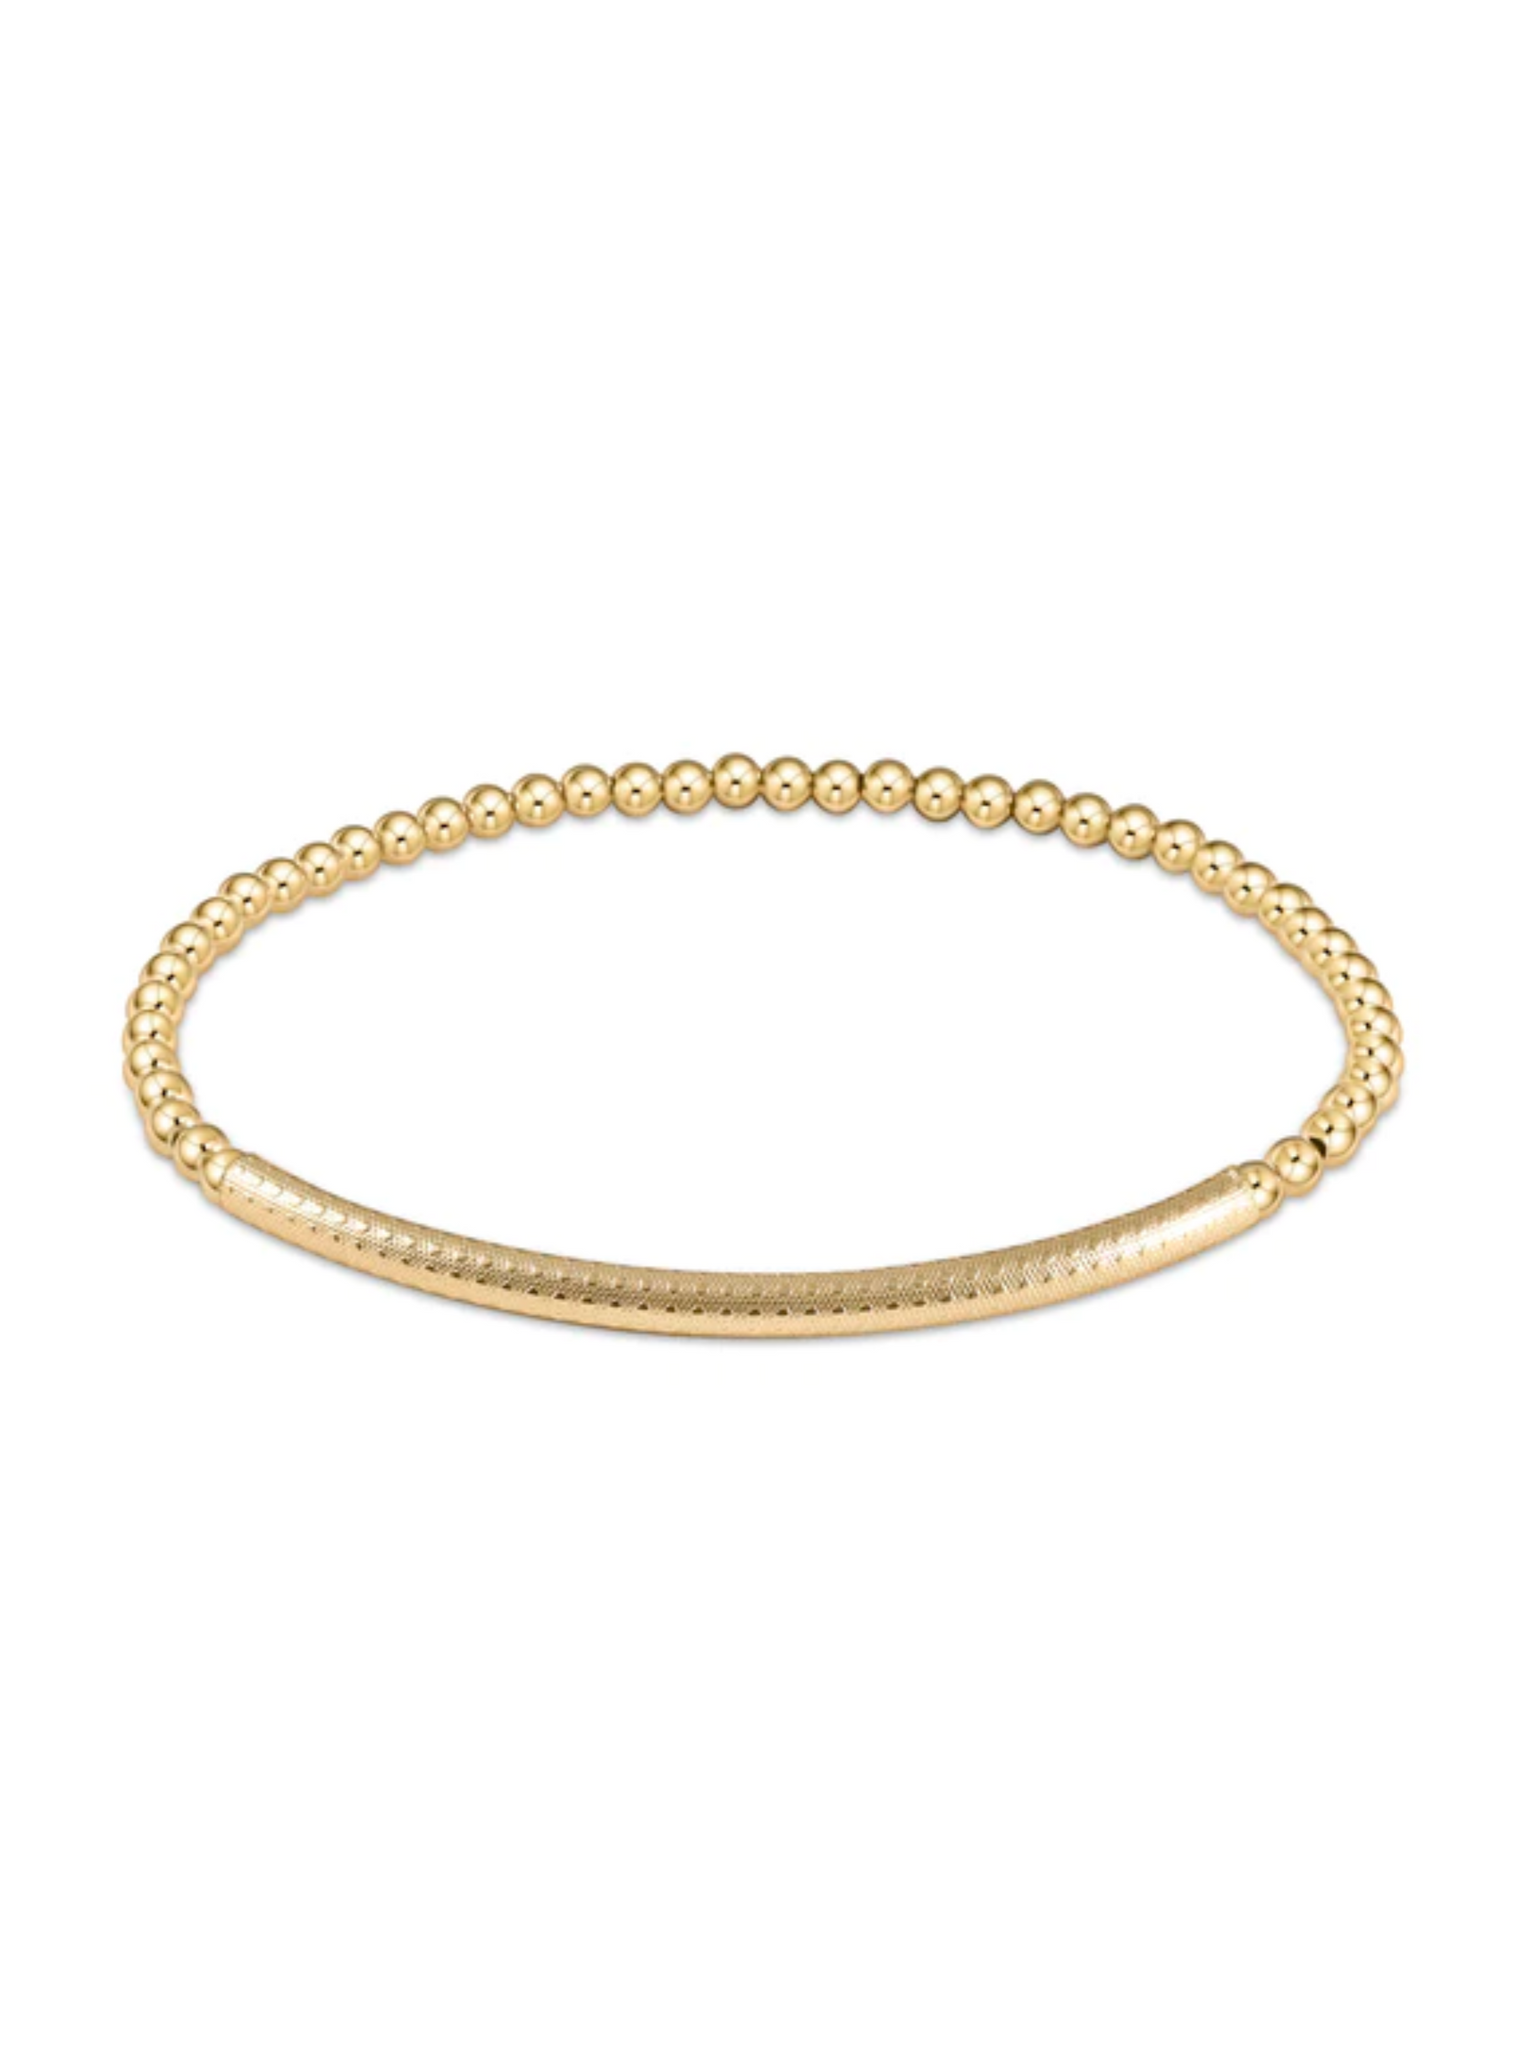 Classic Gold 3MM Bead Bracelet Bliss Bar Textured [BCLG3BBTG]